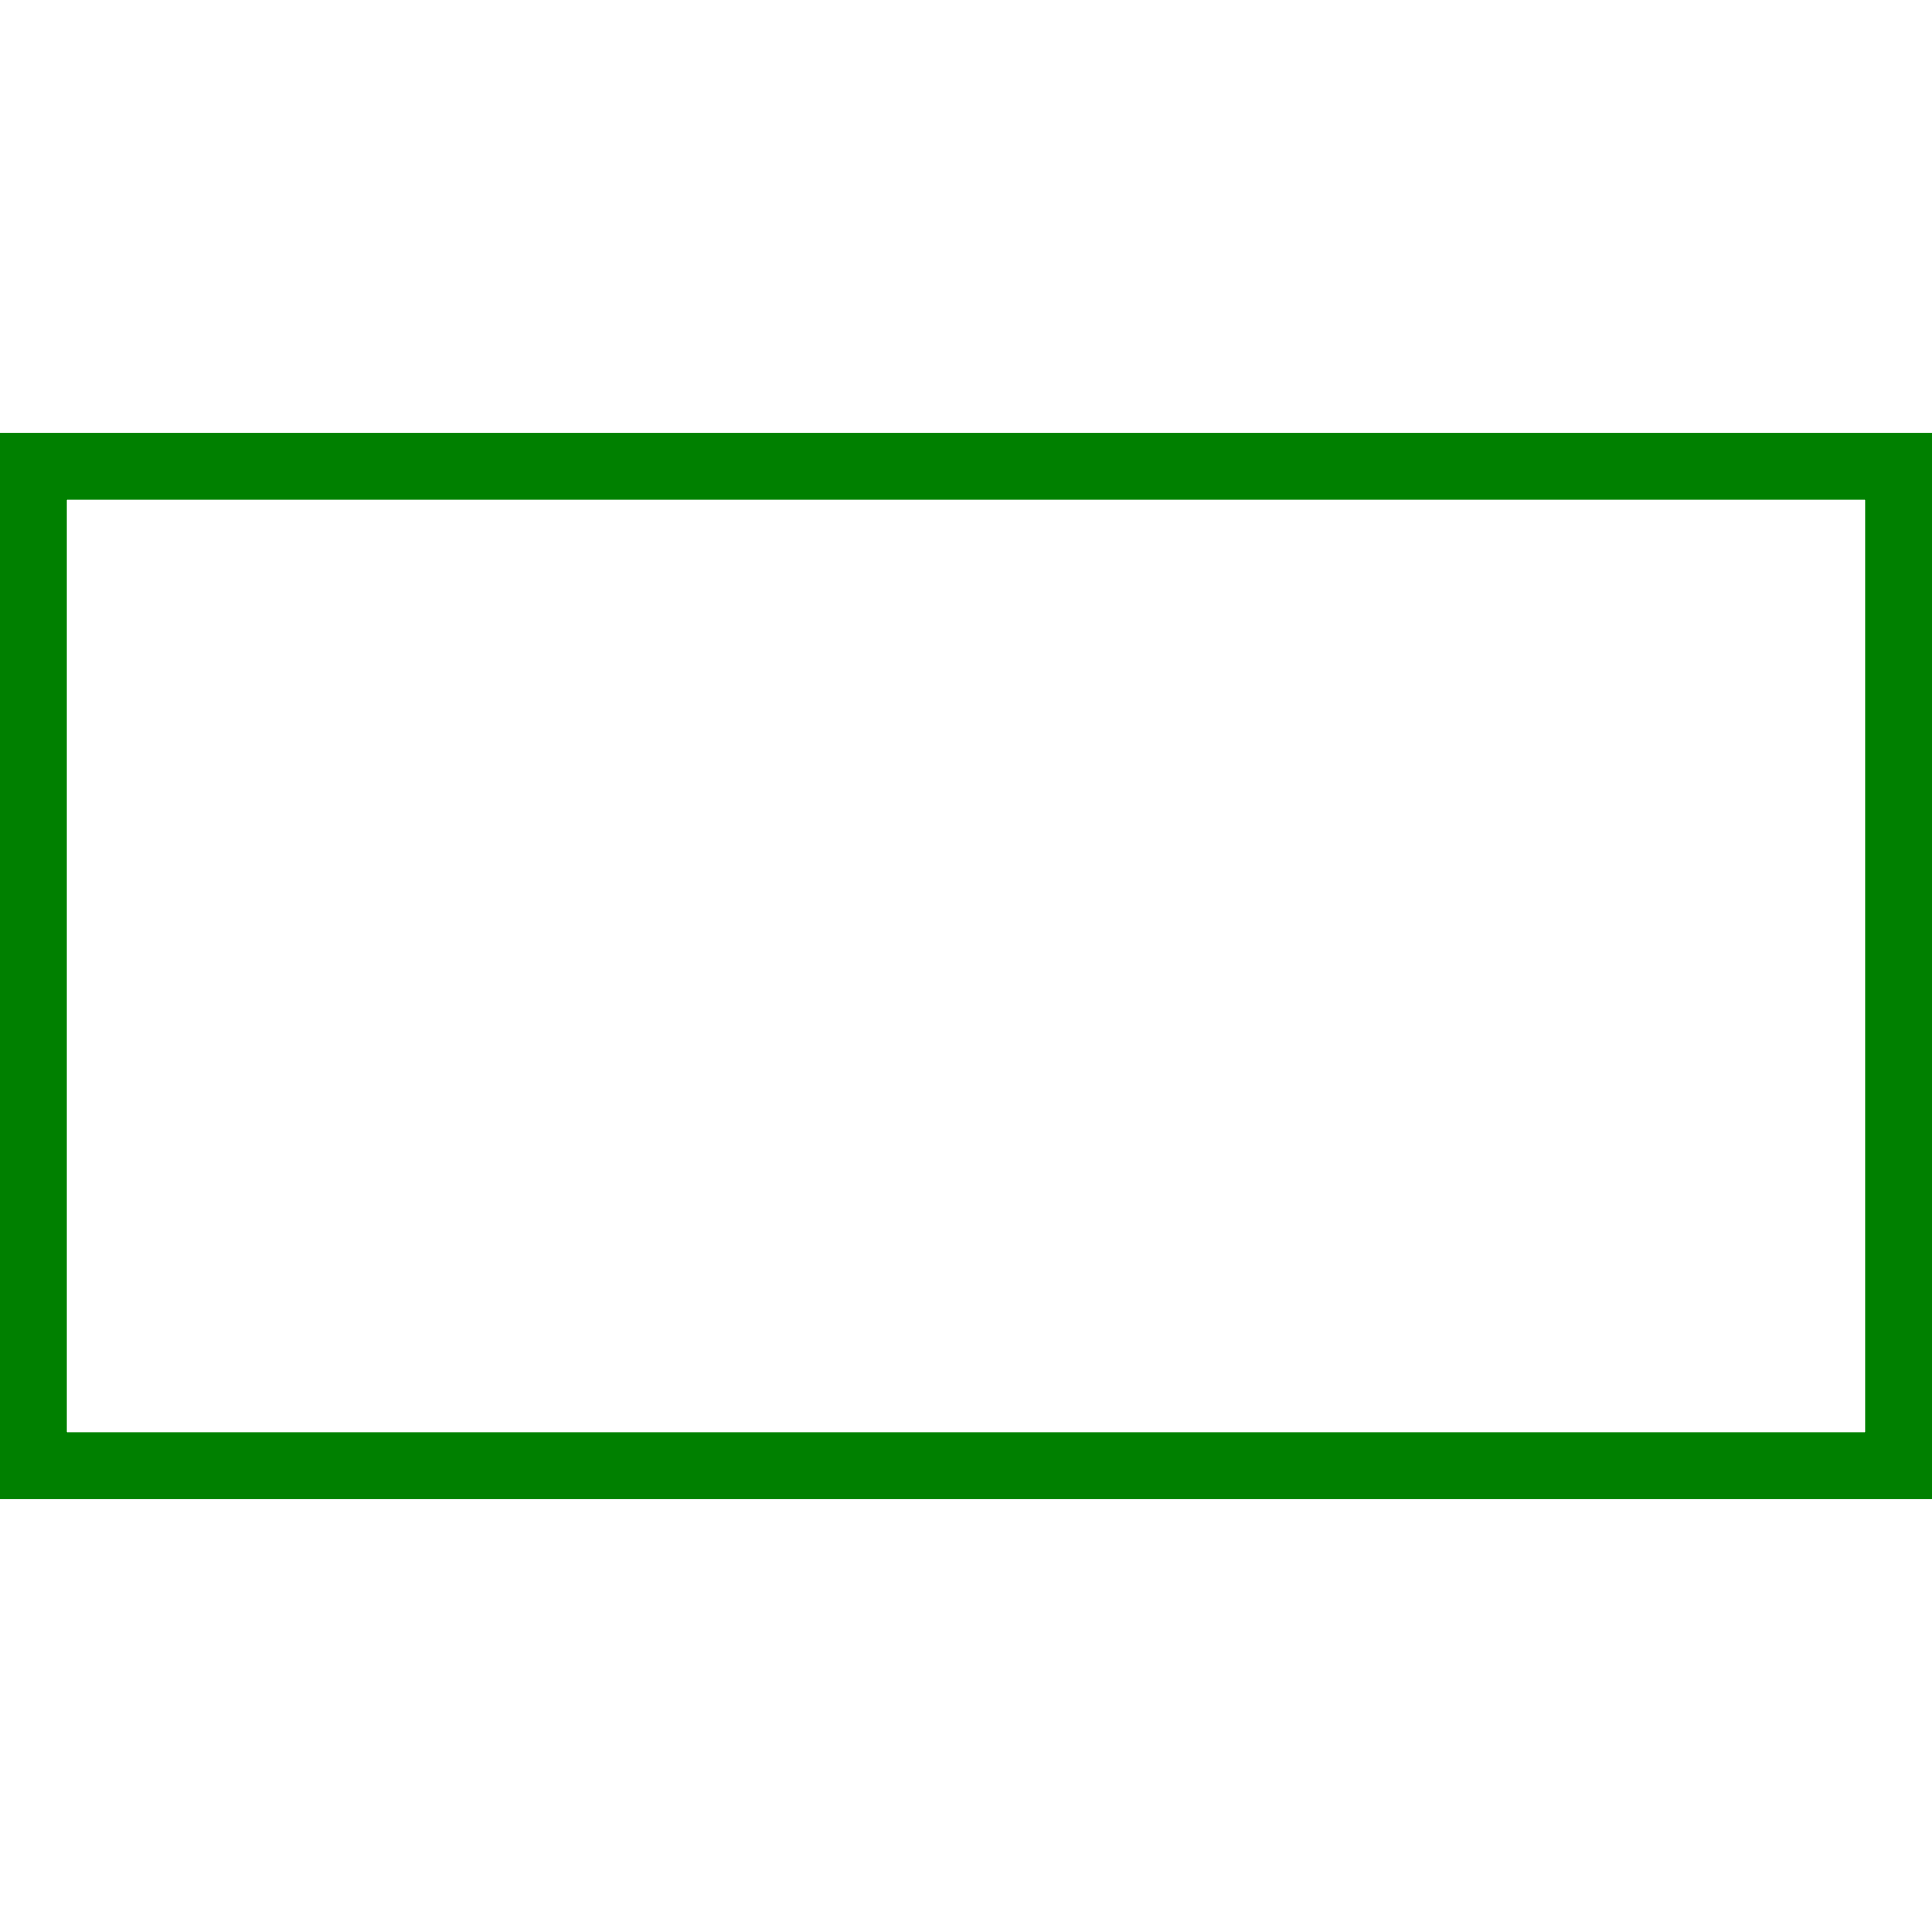 transparent rectangle on screen